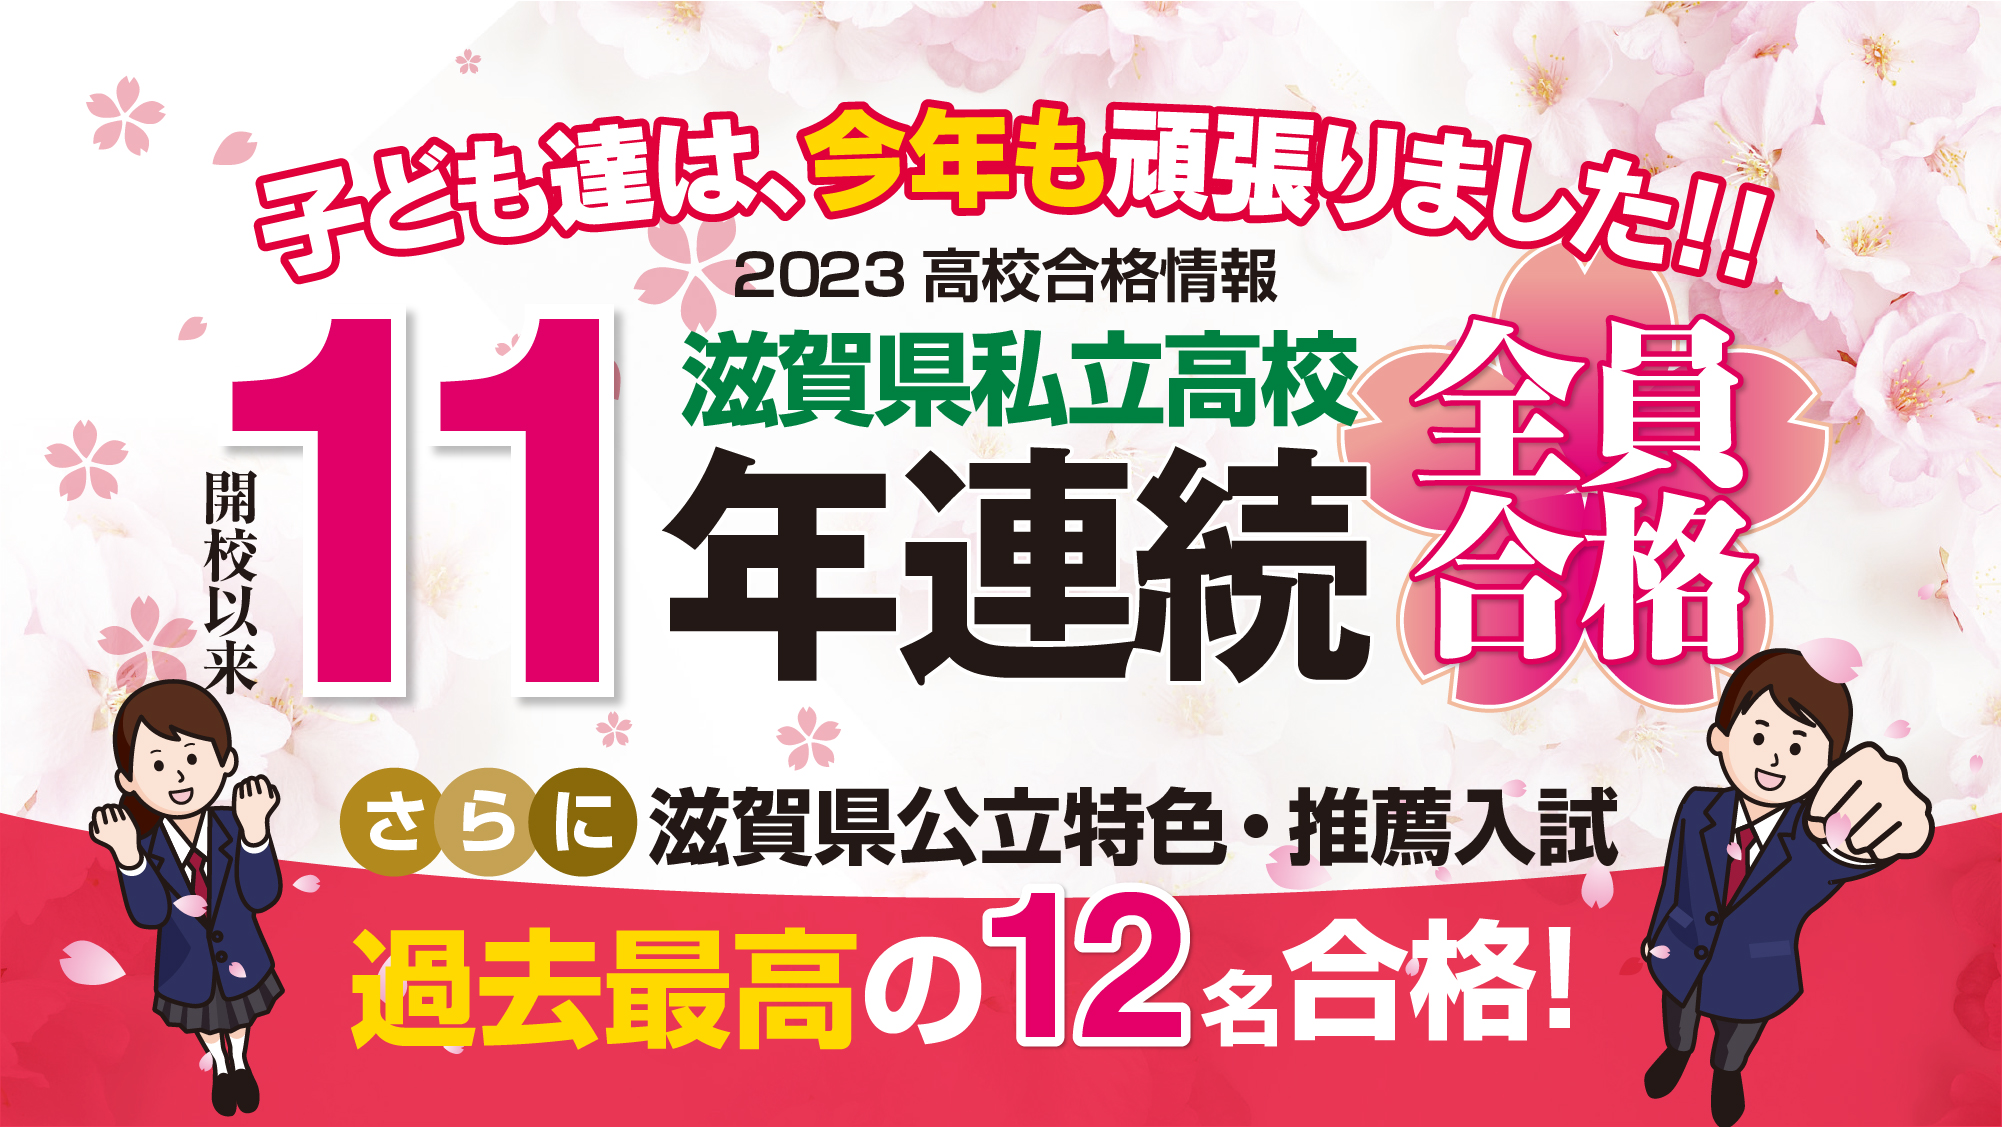 滋賀県私立高校11年連続全員合格！滋賀県公立特色・推薦入試。さらに過去最高の12名合格！